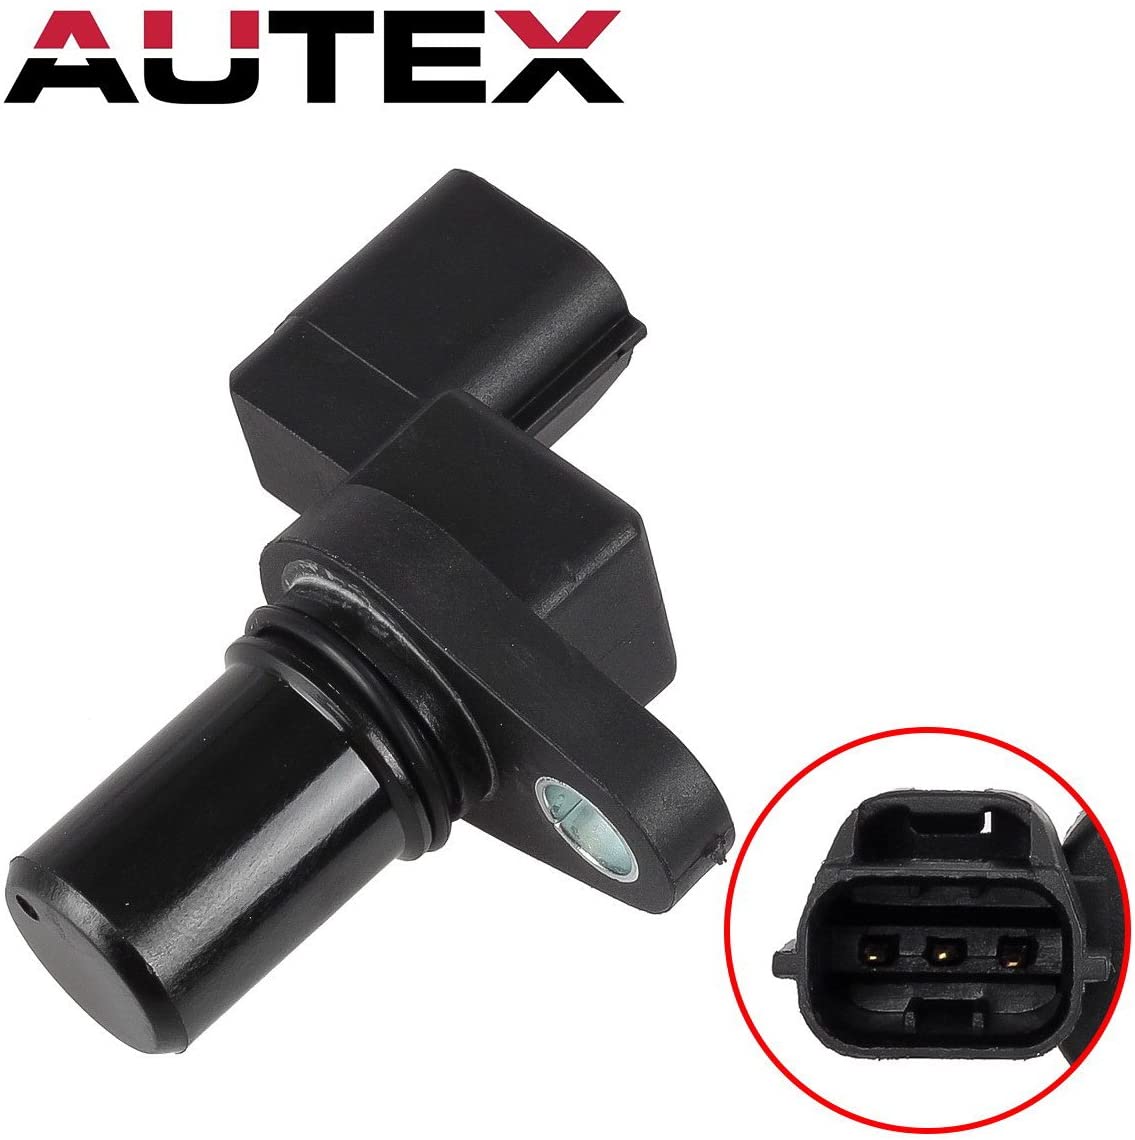 AUTEX Transmission Input Vehicle Speed Sensor SC297 Auto Transmission Compatible with Hyundai Elantra 2001 2002 2003 2004 2005 2006 07 L4 2.0L/Replacement for Kia Sedona 2003 2004 2005-2010 L4 3.5L